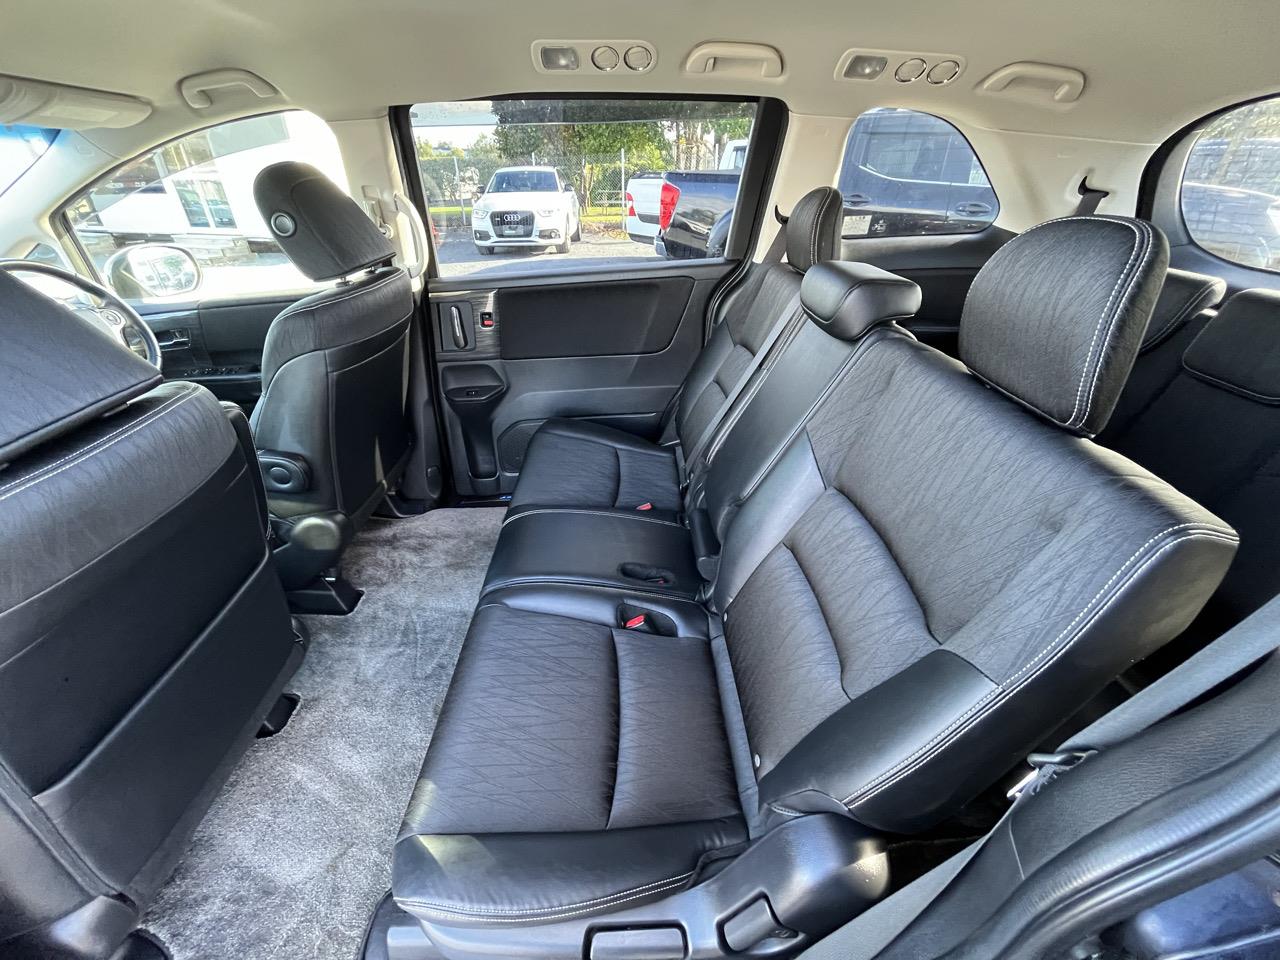 2014 Honda Odyssey Absolute